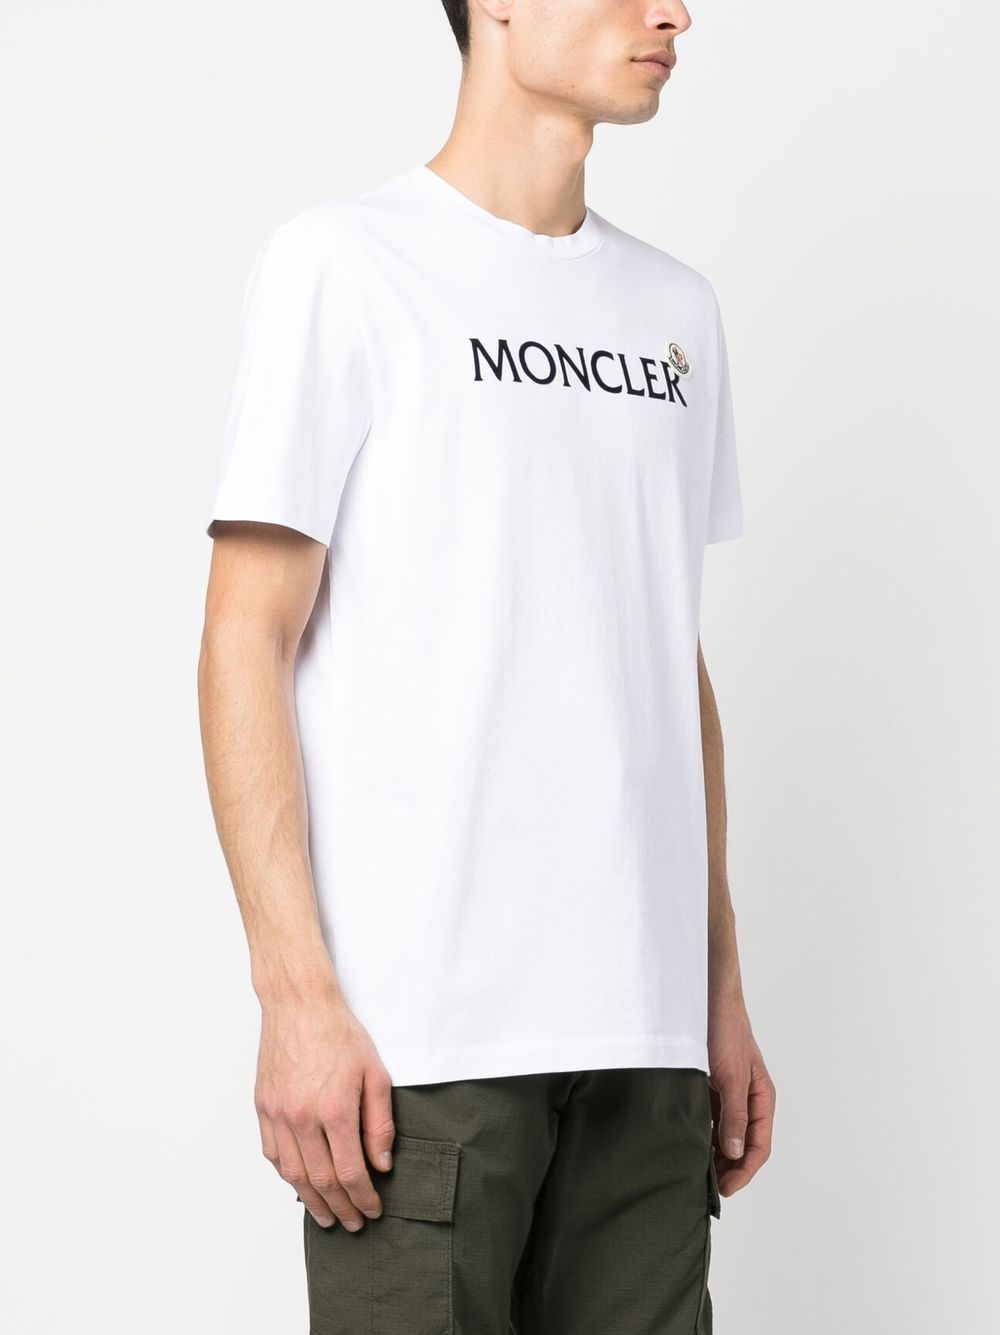 Moncler Men's Logo Ribbed T-Shirt in Green Moncler